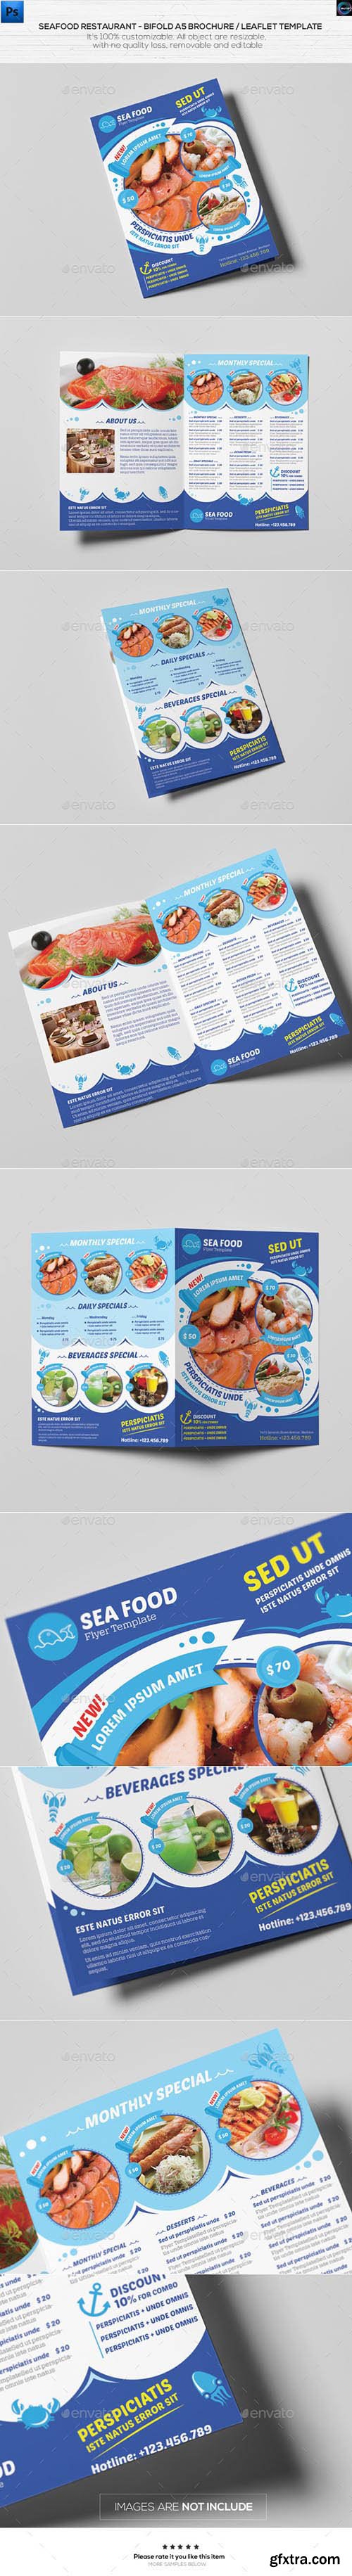 Graphicriver Seafood Restaurant-A5 Brochure/Leaflet Template 12341412